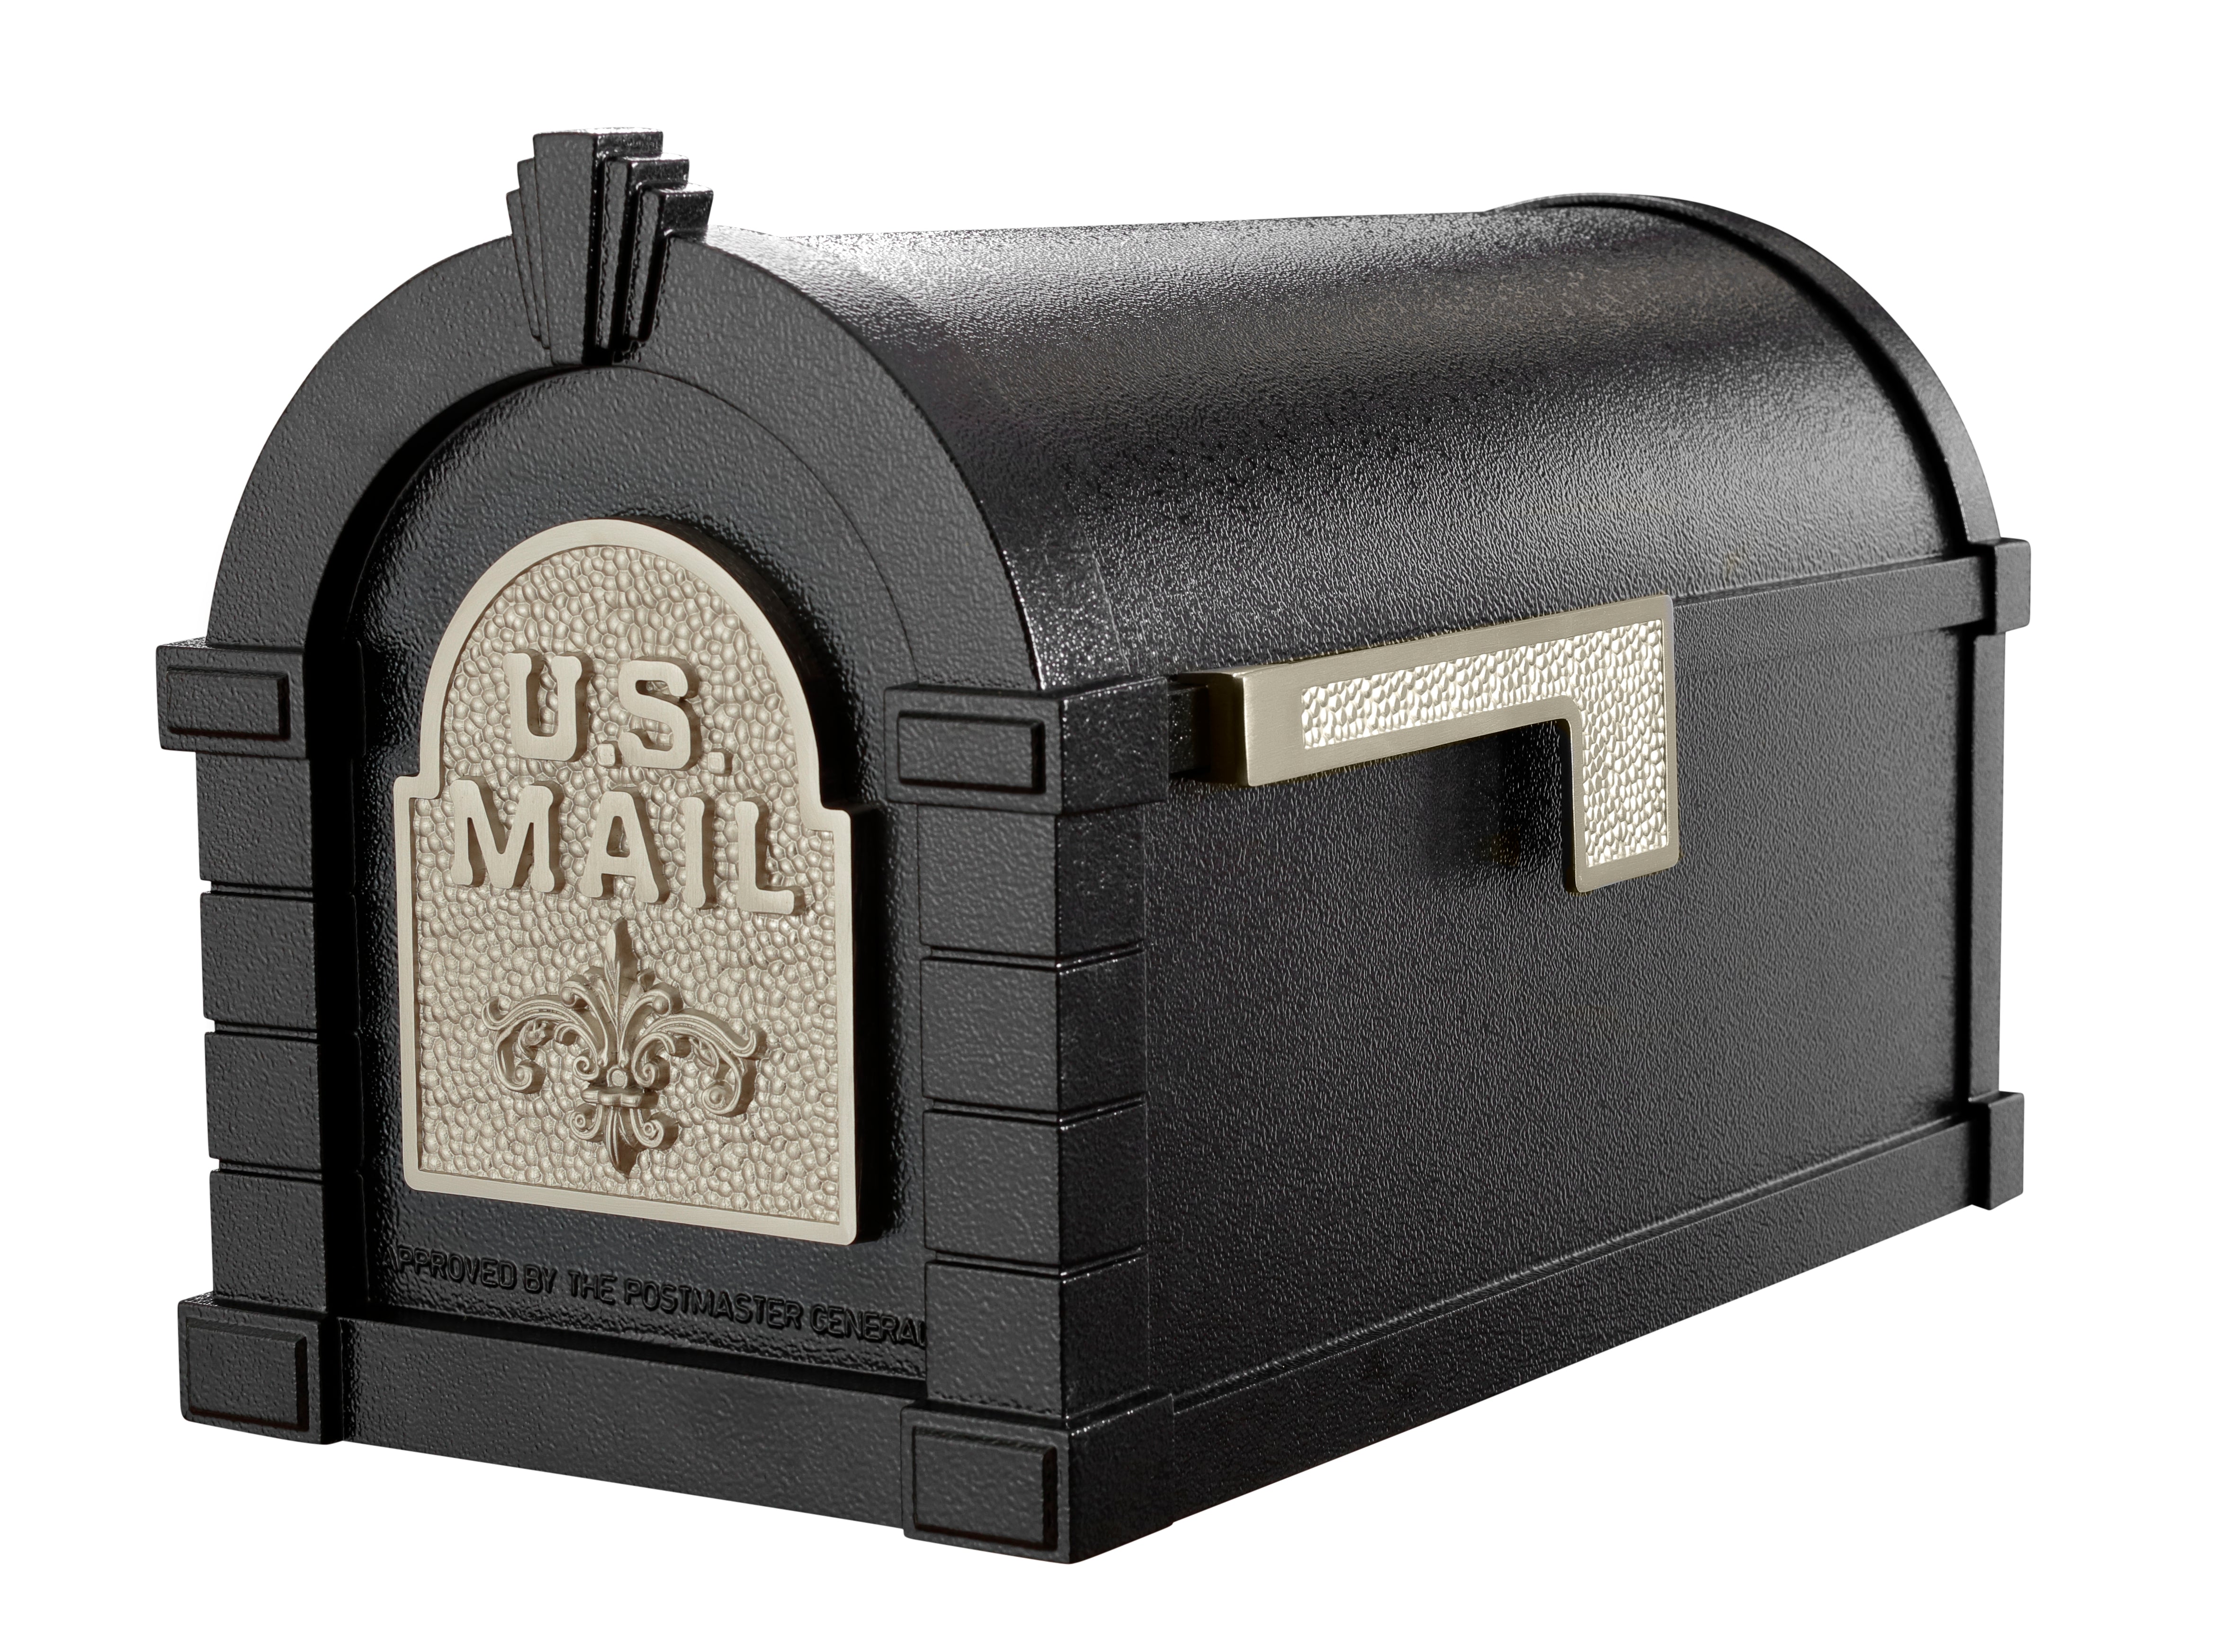 Keystone Mailbox